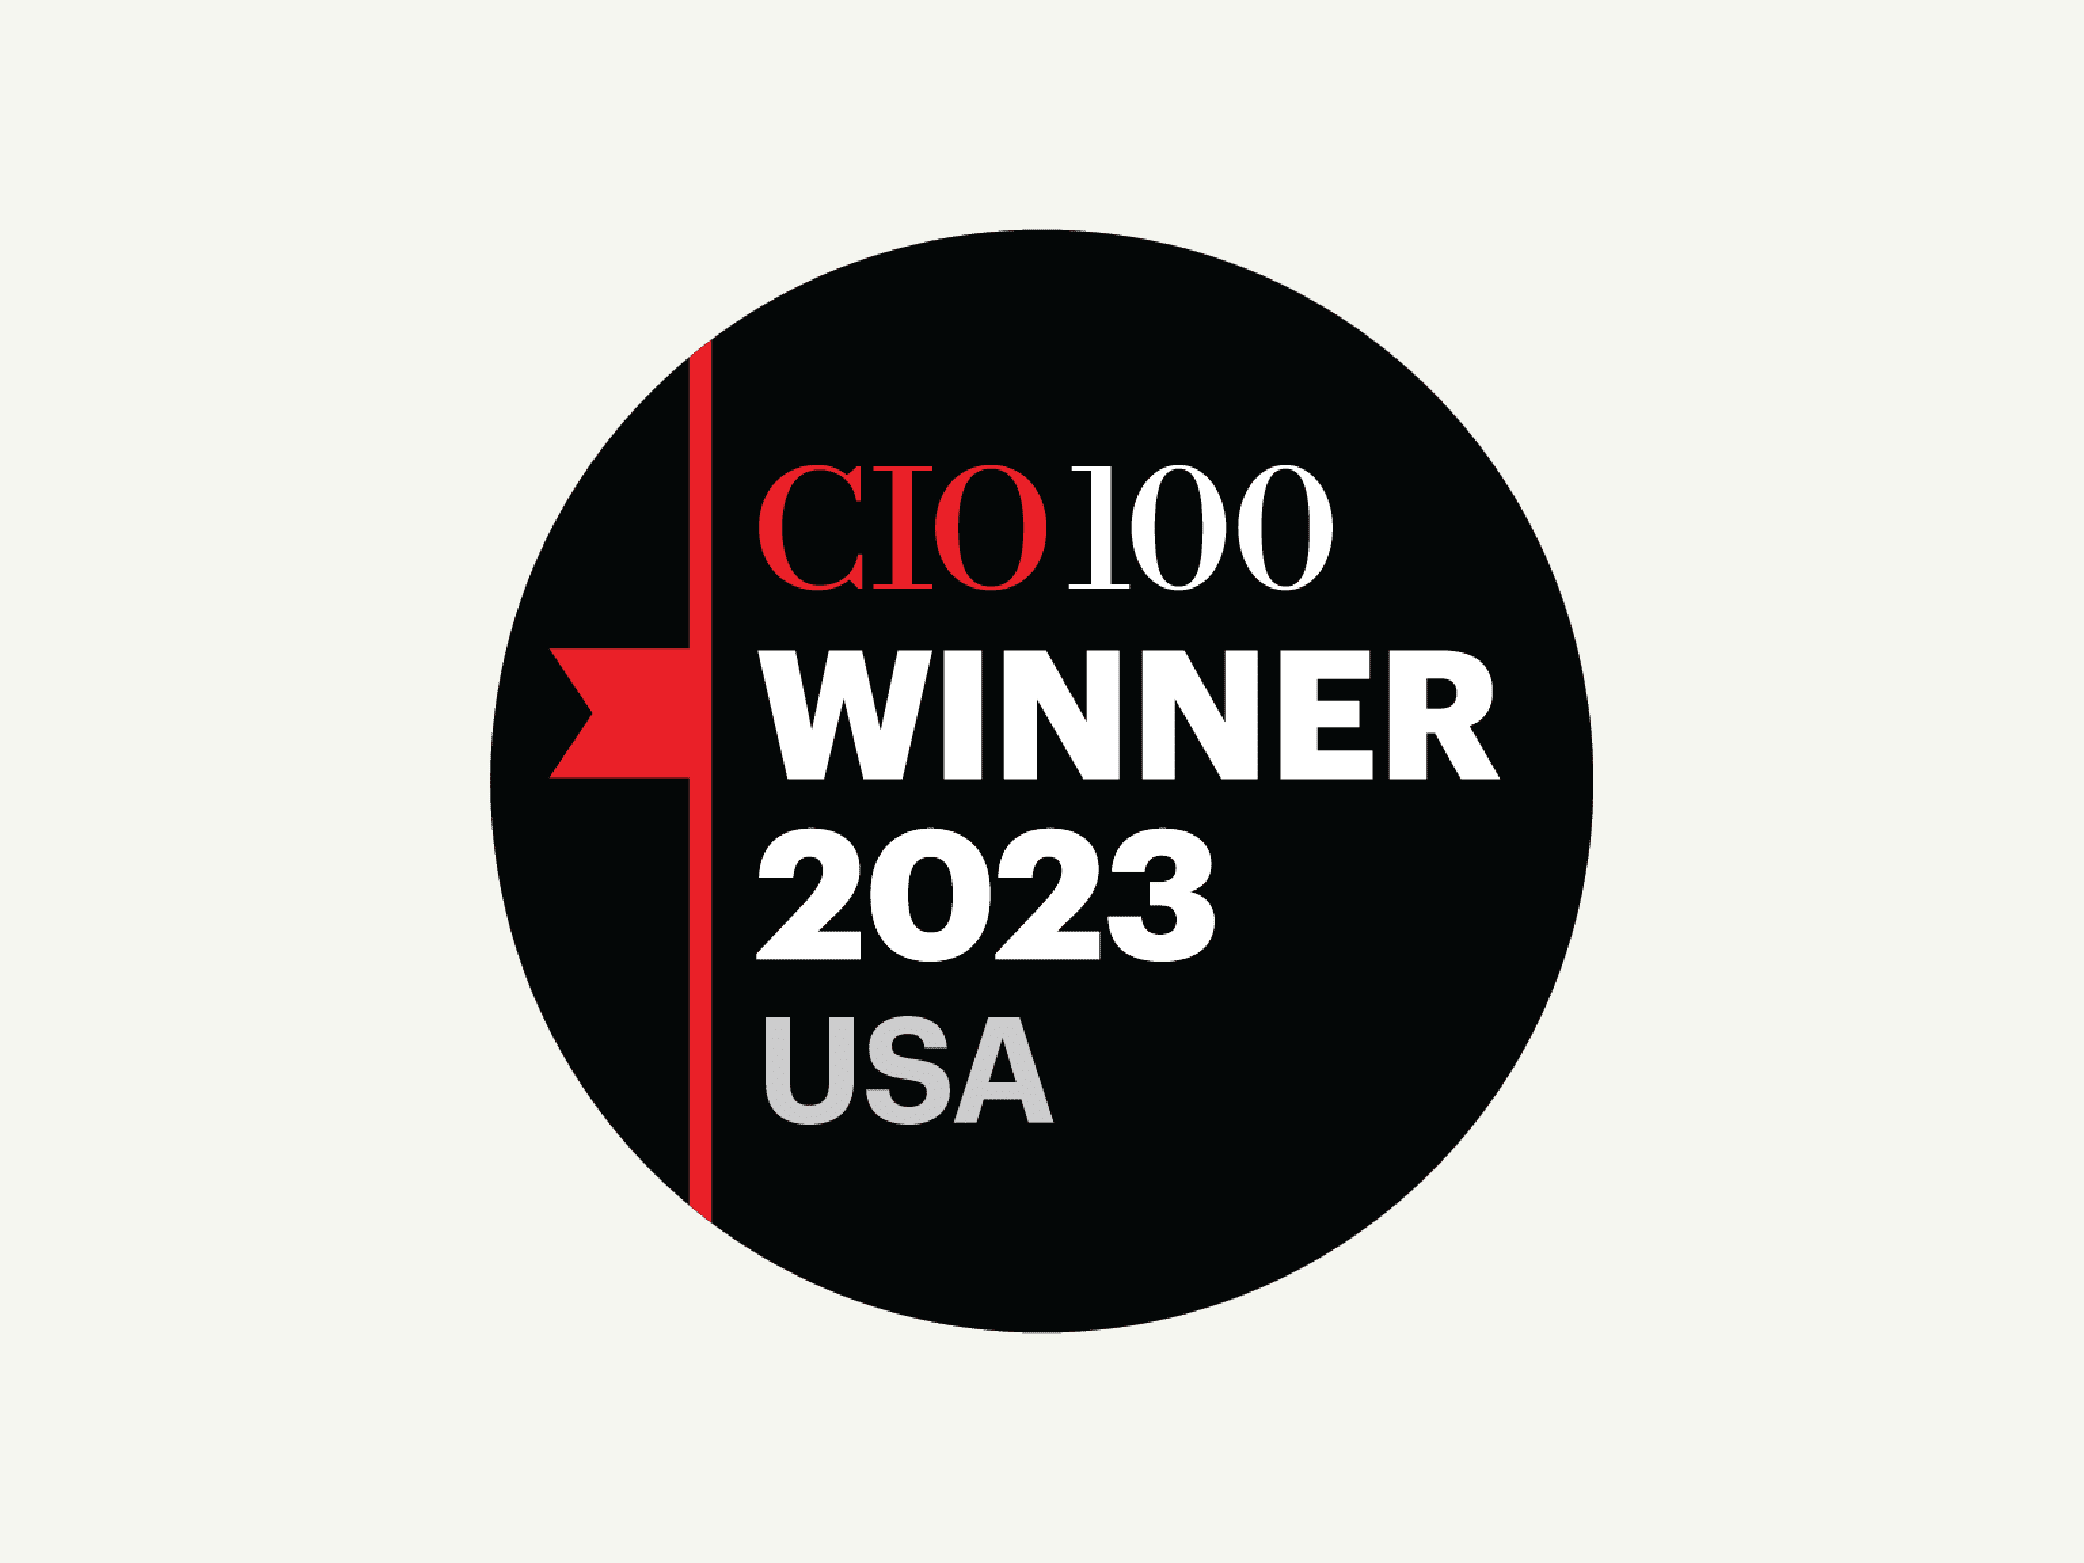 Black and red CIO 100 Winner award logo on a cream background